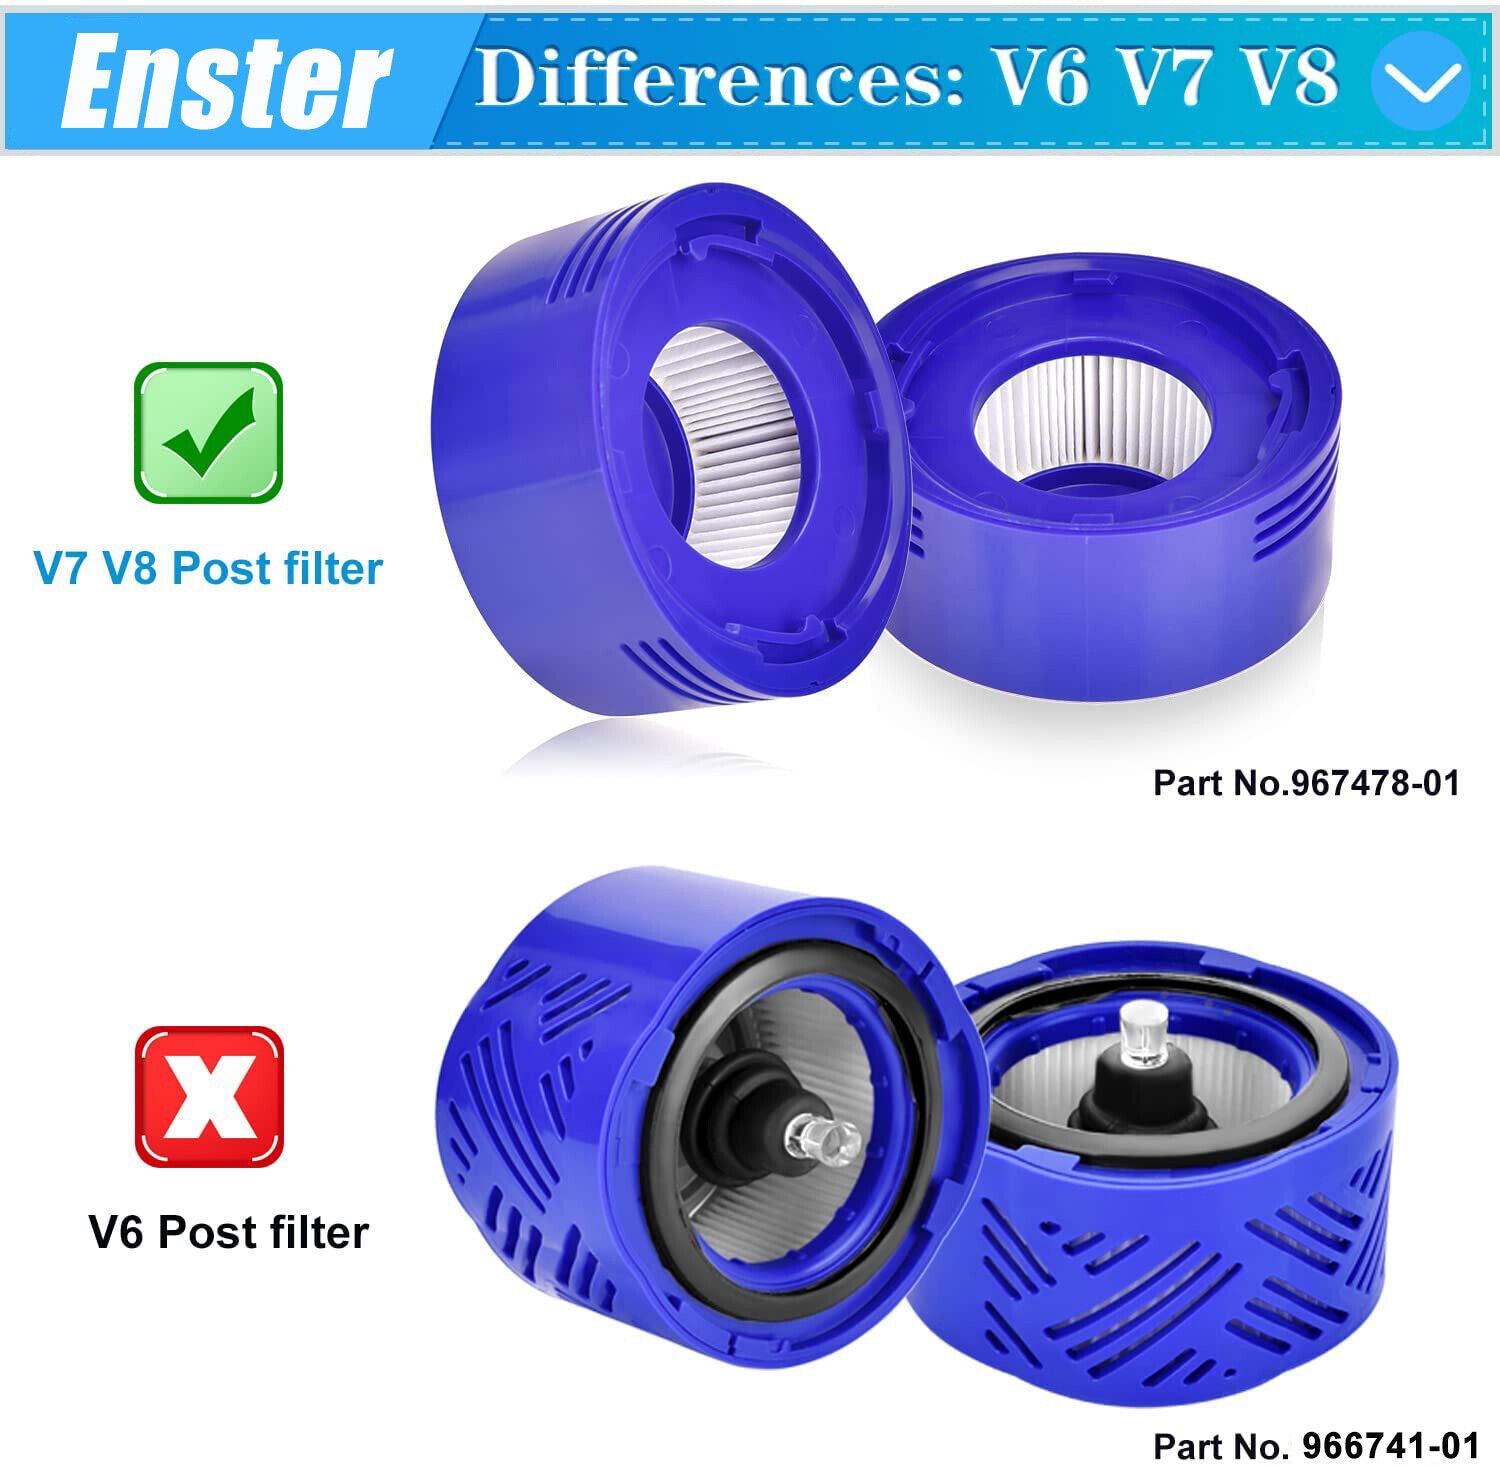 Dyson V8 Carbon Fiber vacuum, Dyson vacuum post filter